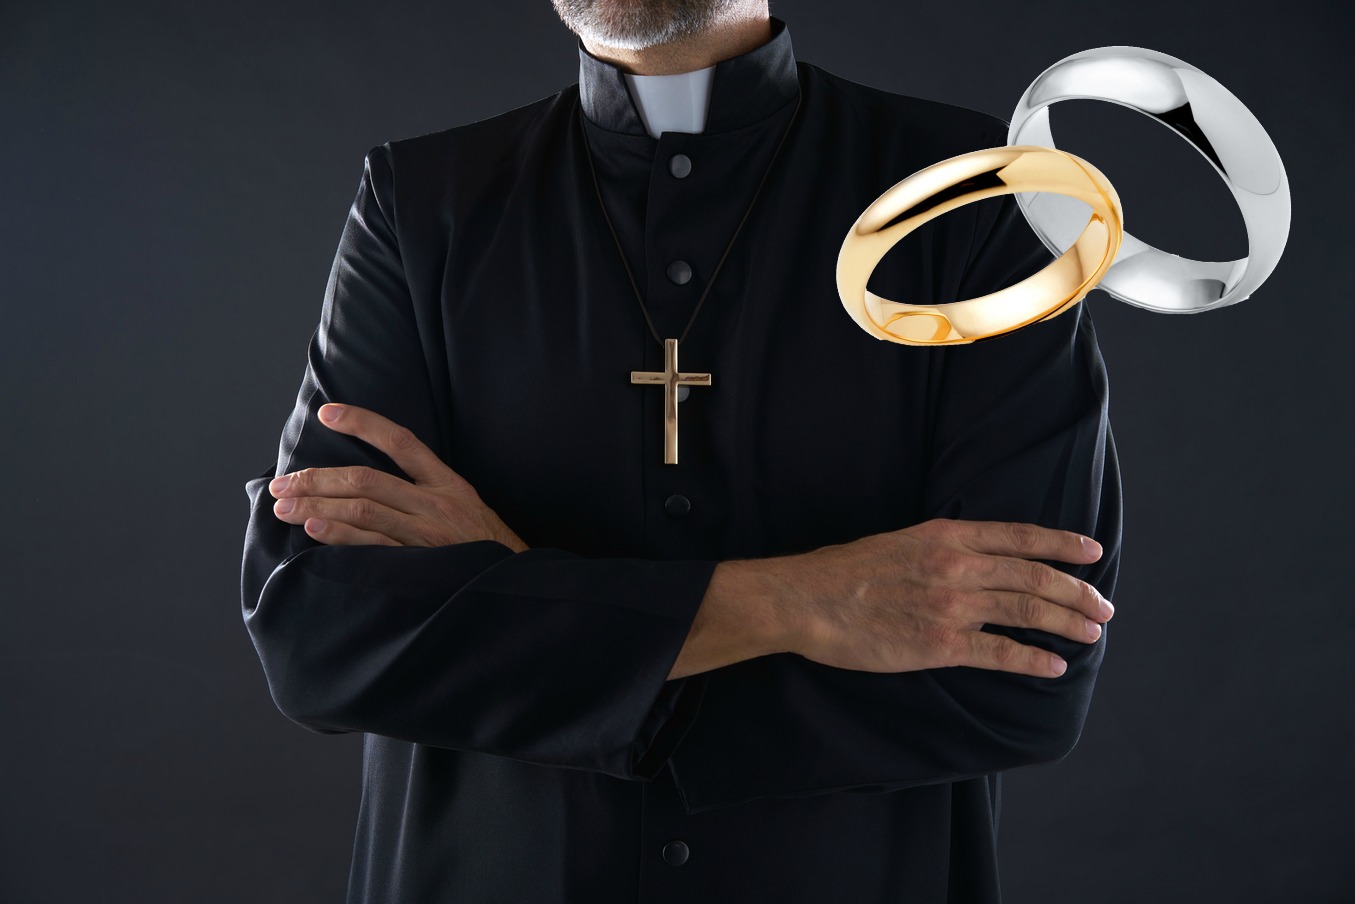 Married Priests